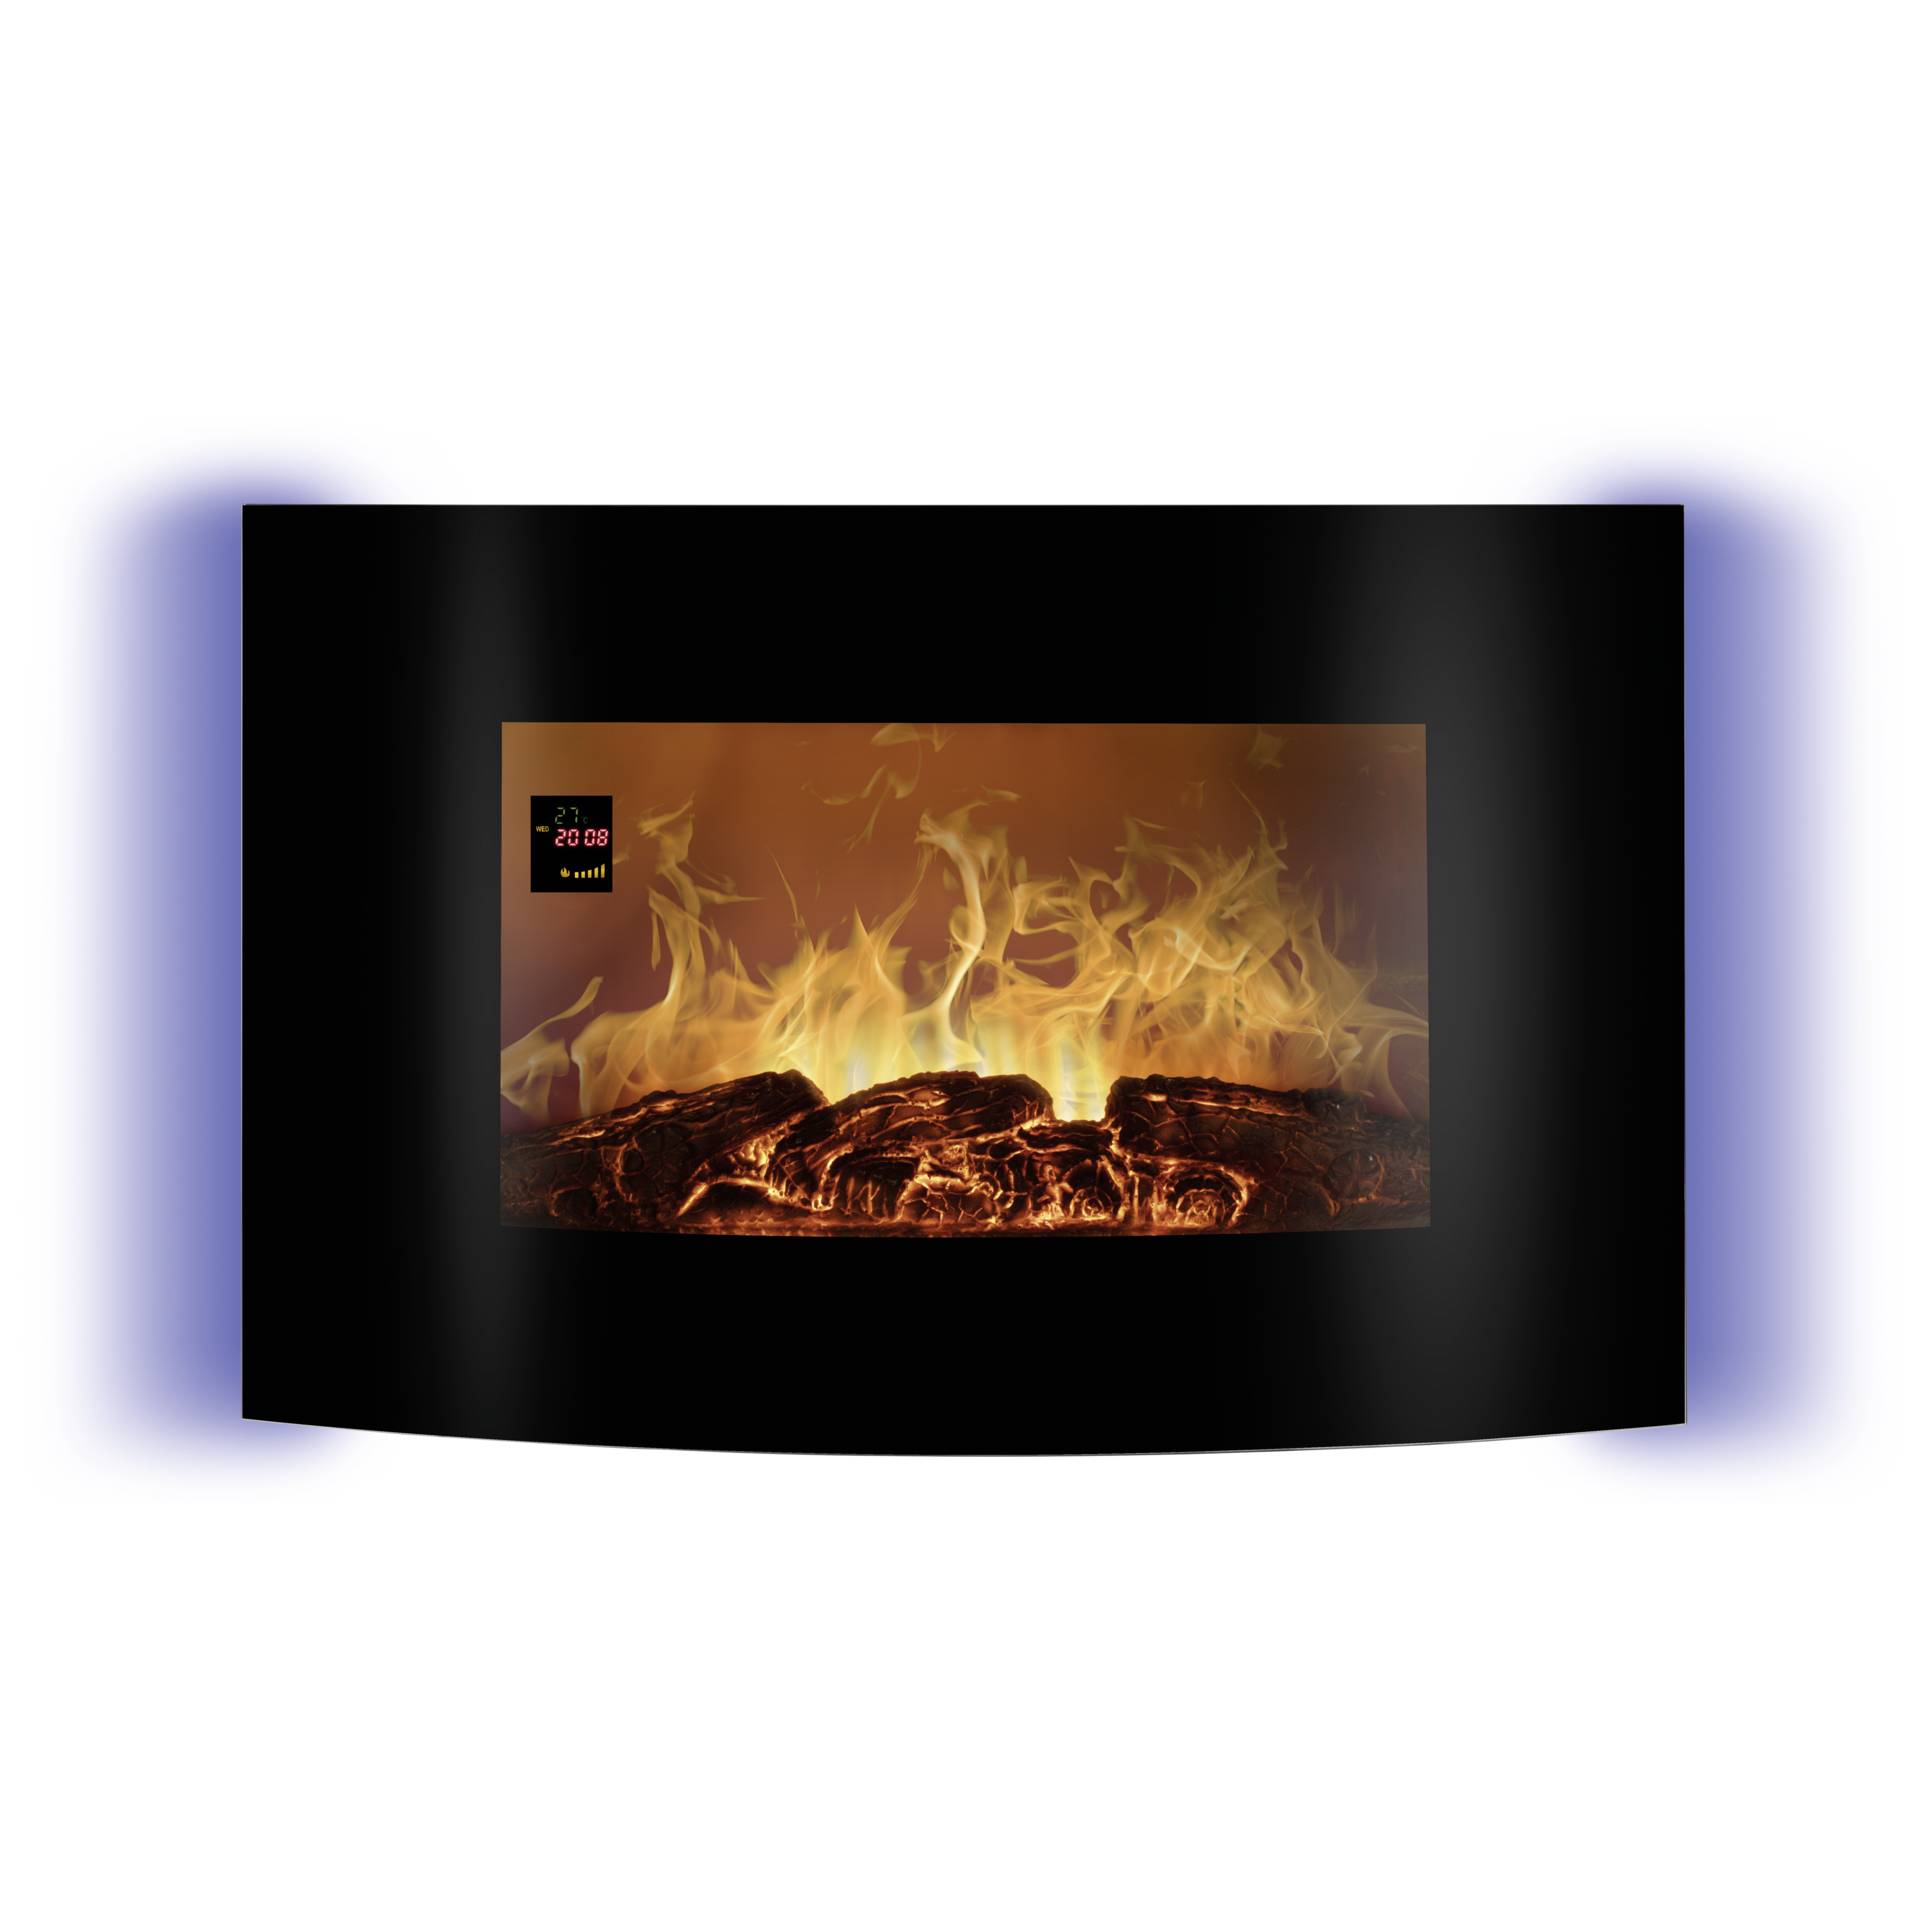 Fireplace with soundbar New Bomann Ek 6021 Cb Black Electric Fireplace Heater